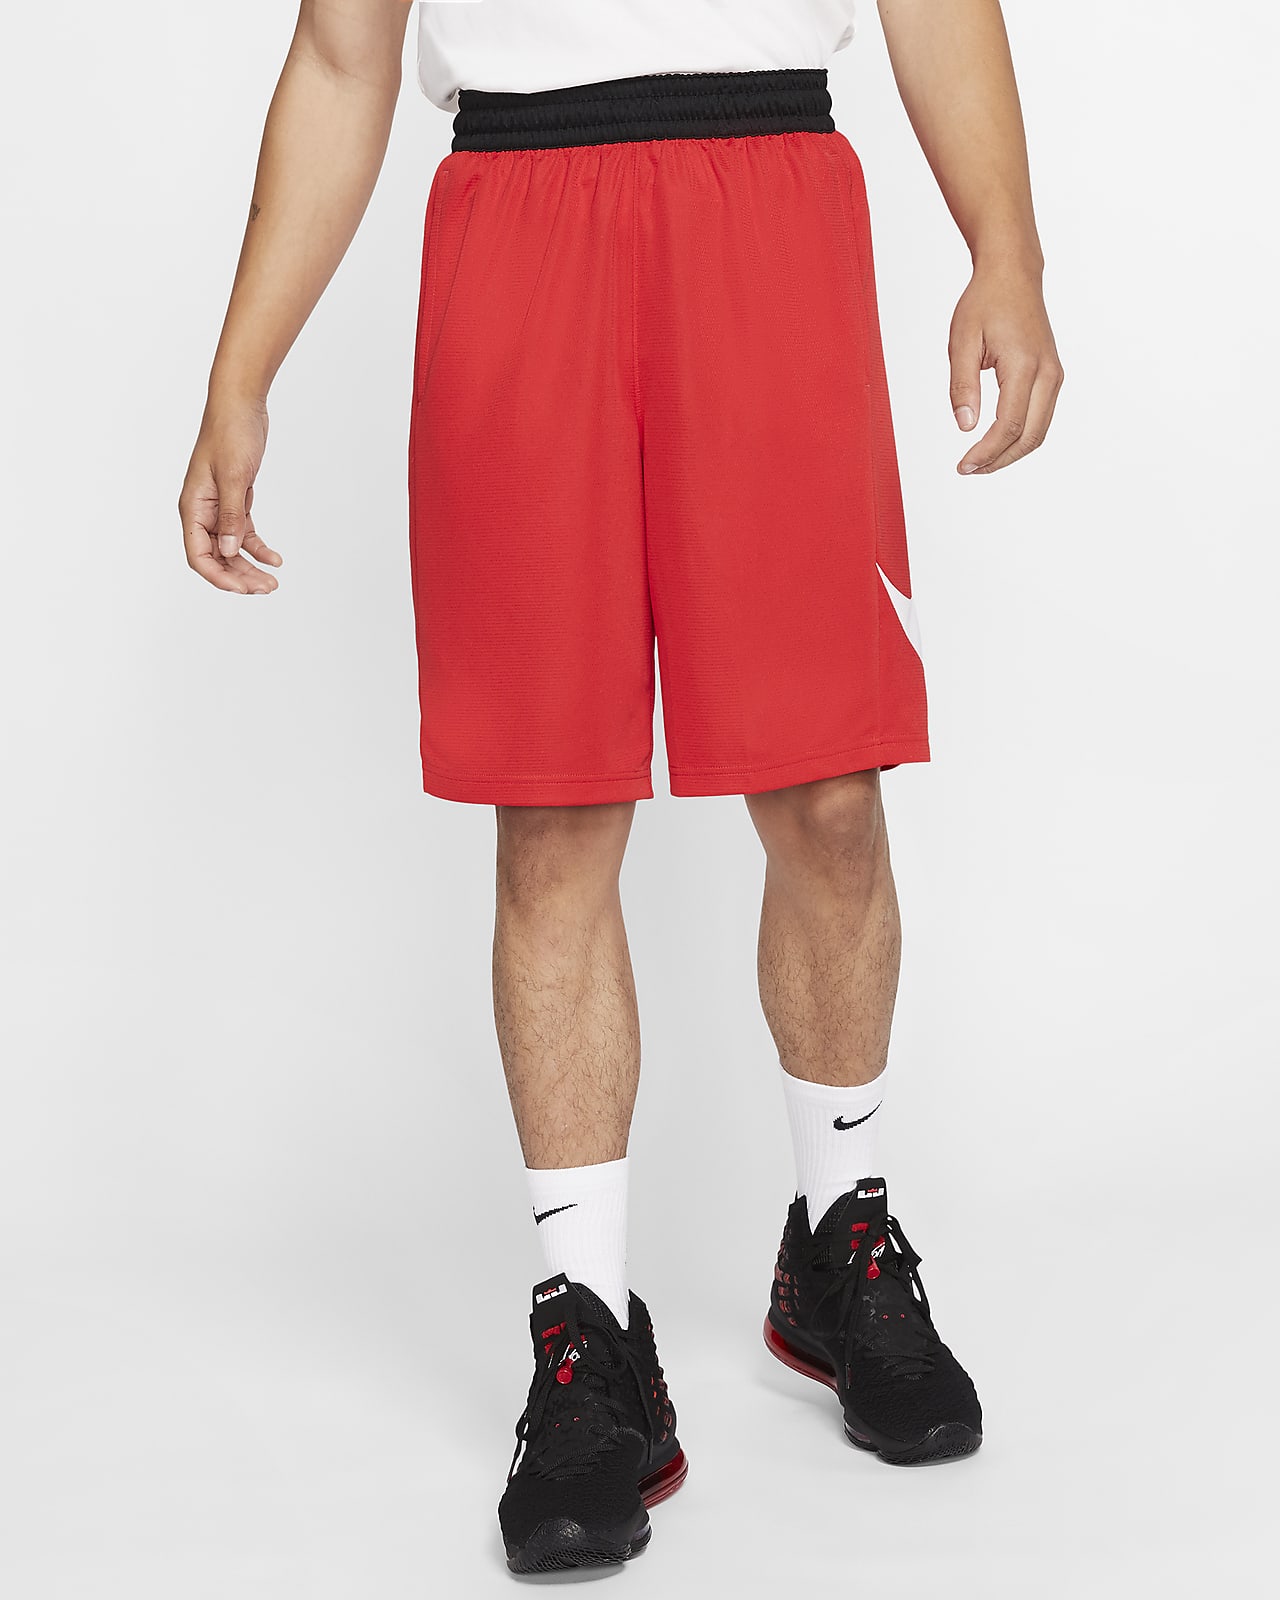 mens basketball shorts in bulk ammo